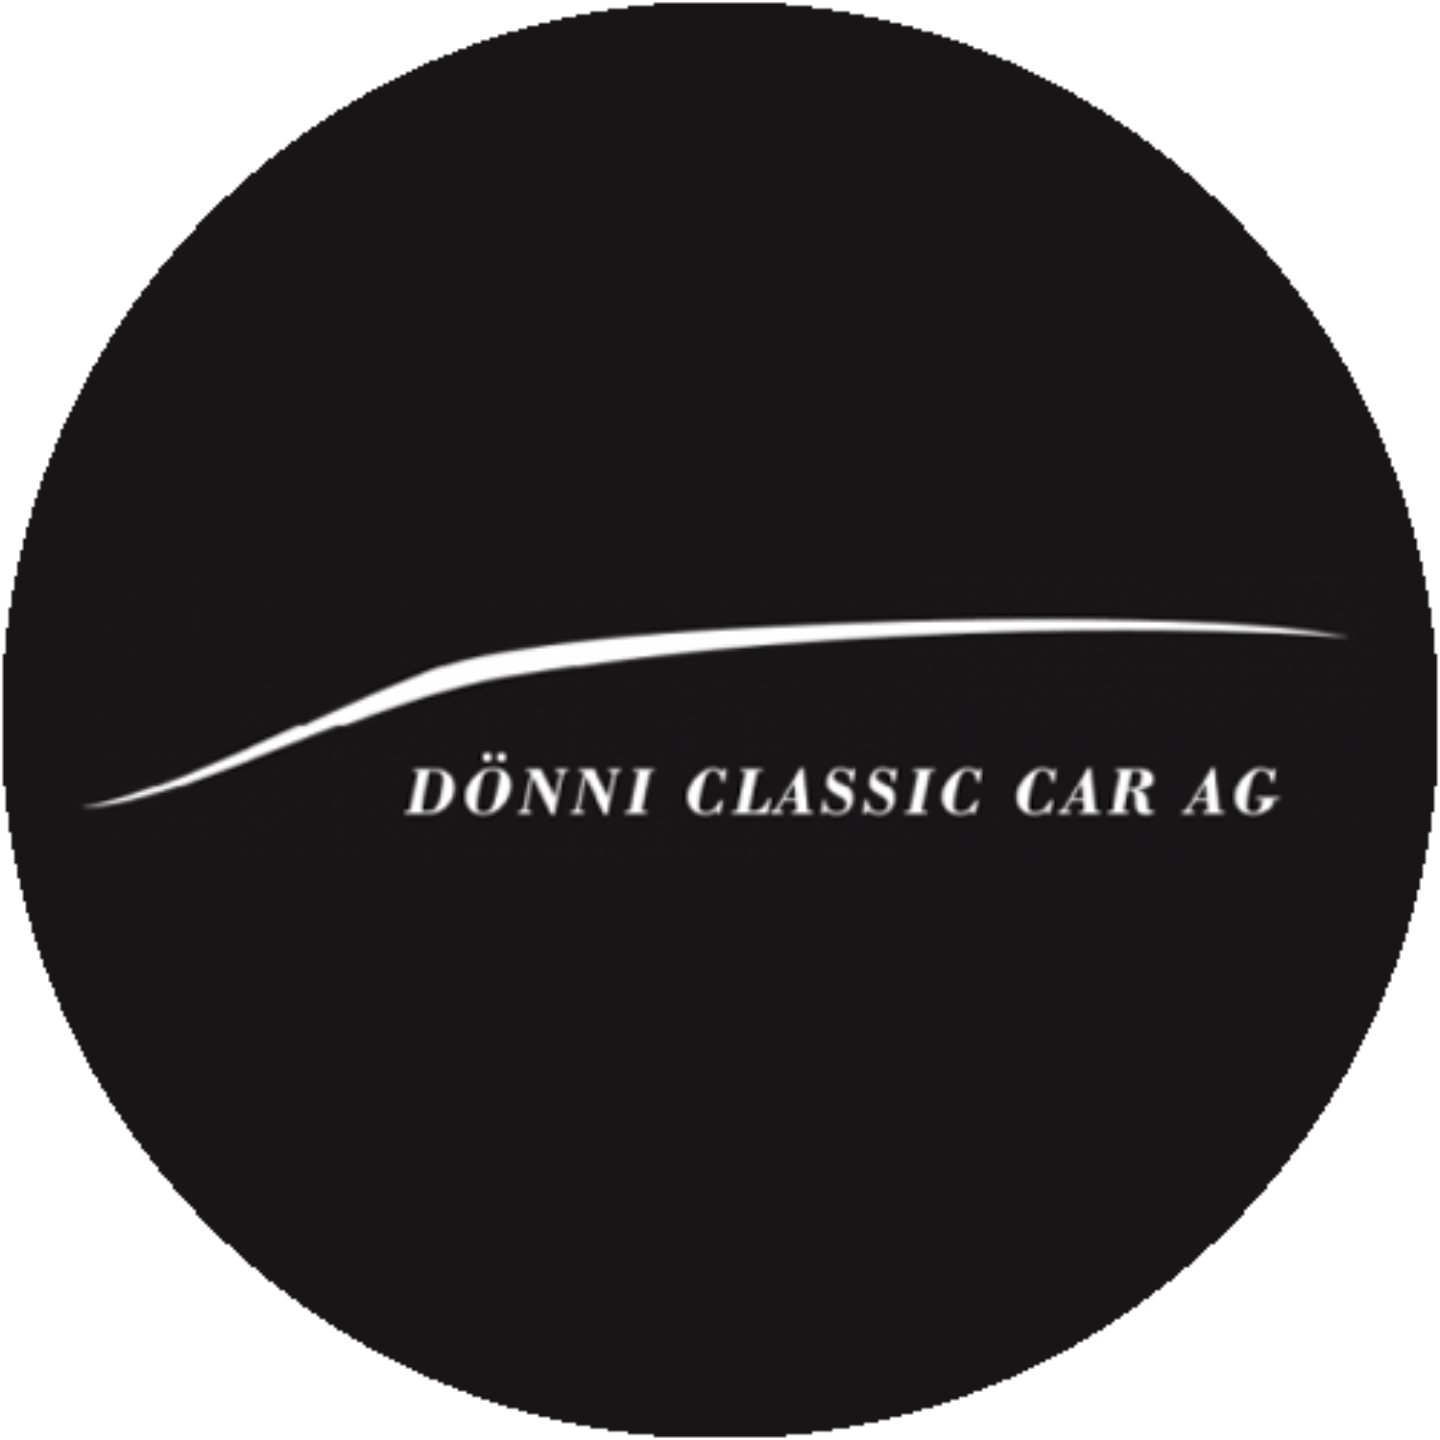 Doenni classic car jaguar